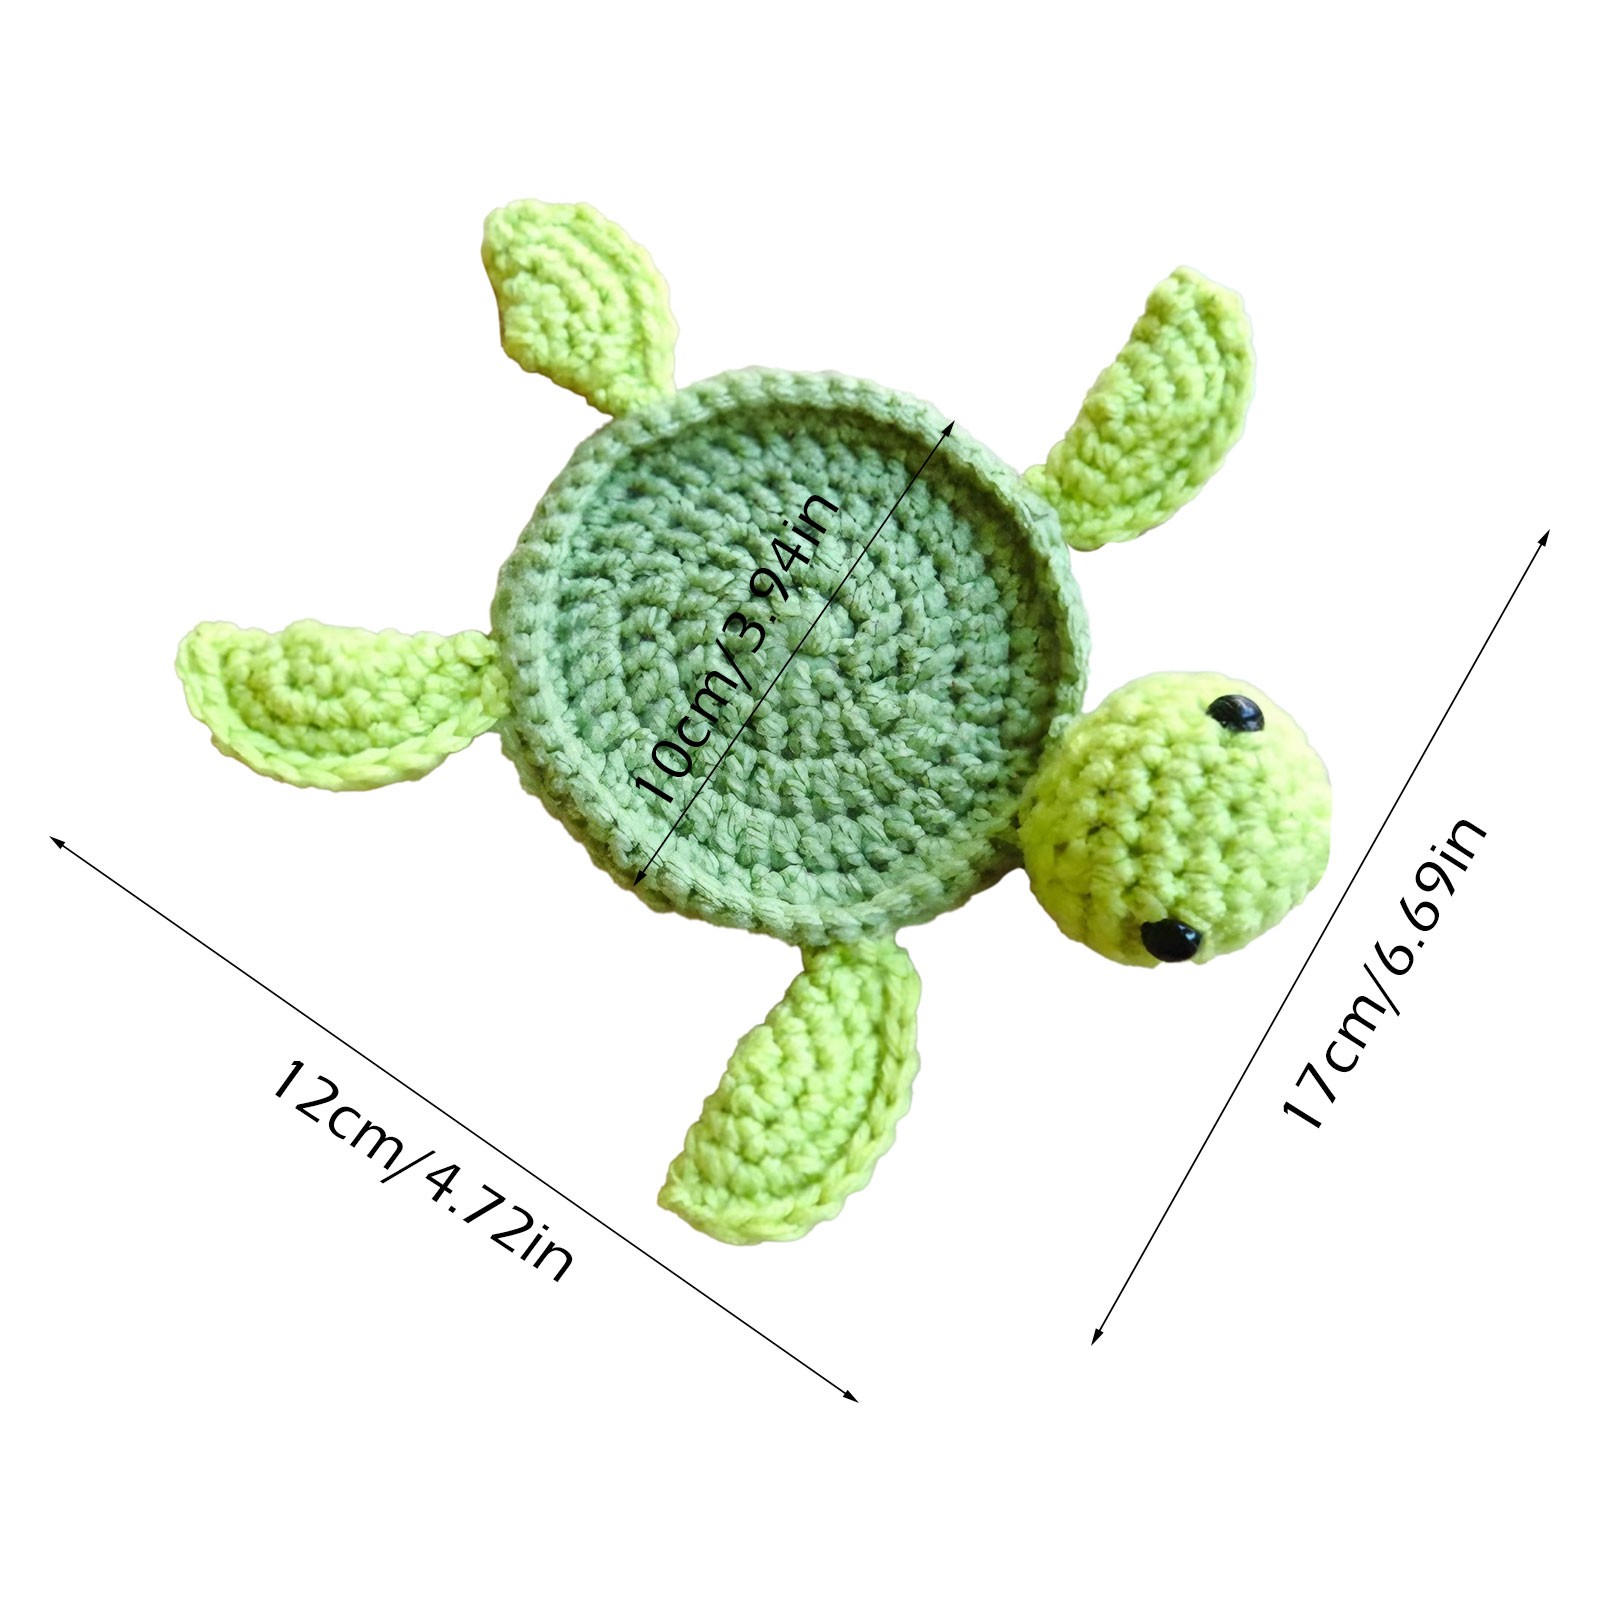 Ewgqwb Crochet Tortoise Coasters for Drinks, Funny Handmade Woven ...